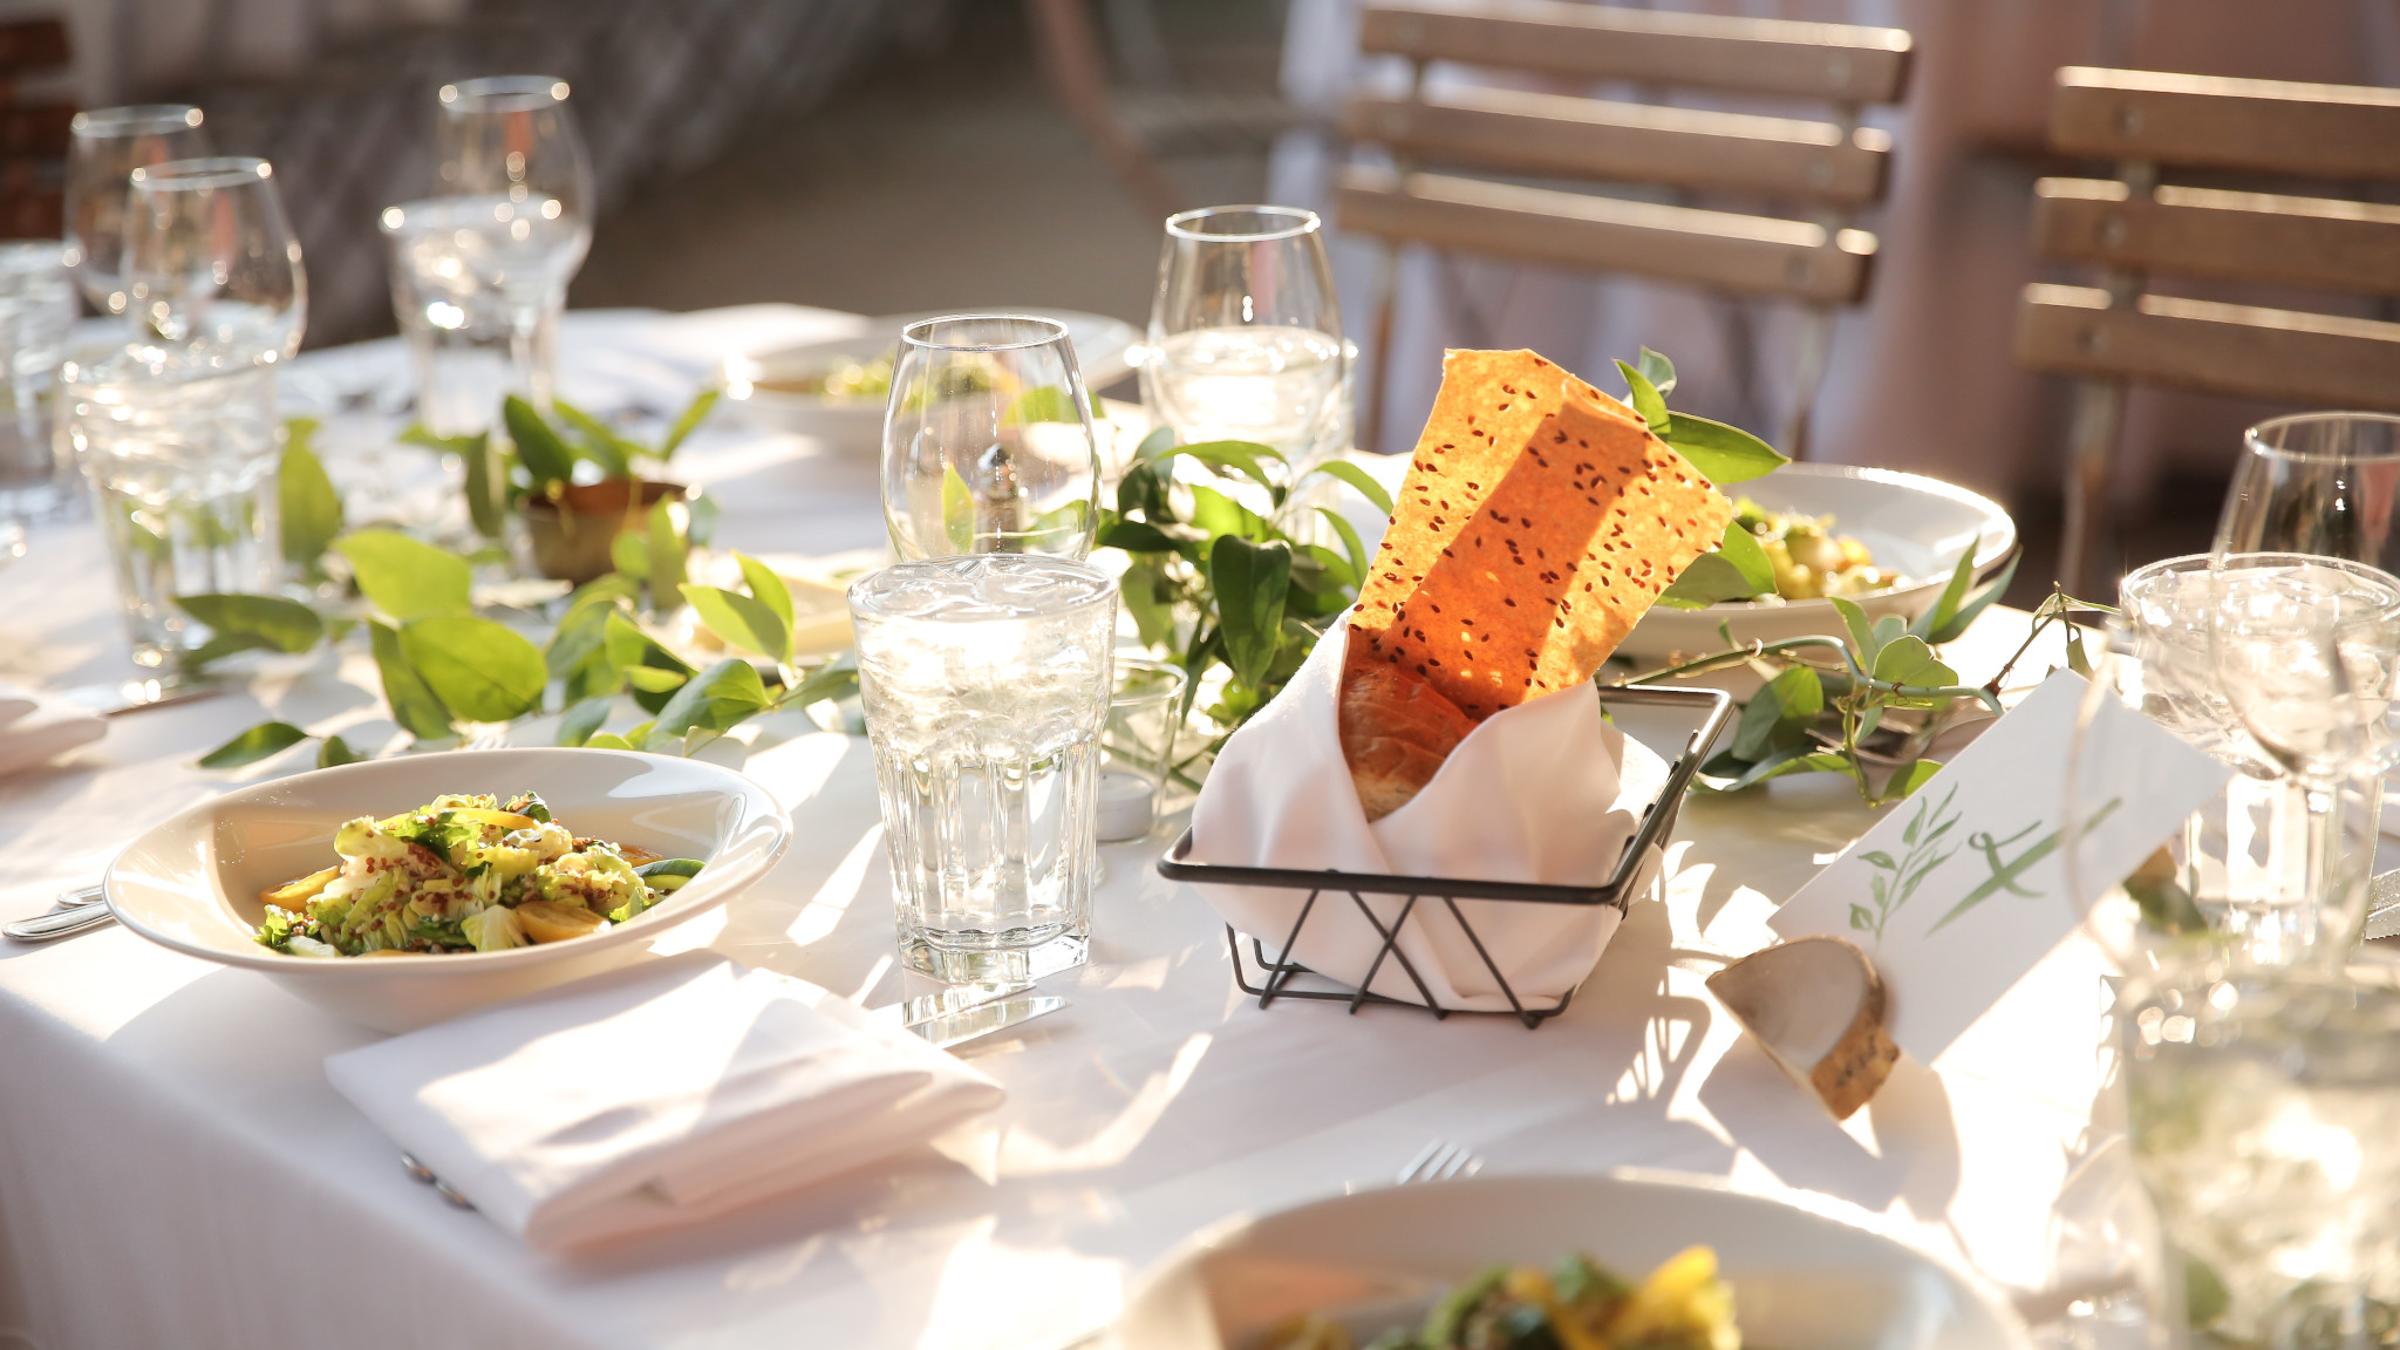 A salad and table setting at a wedding at Deer Valley Resort